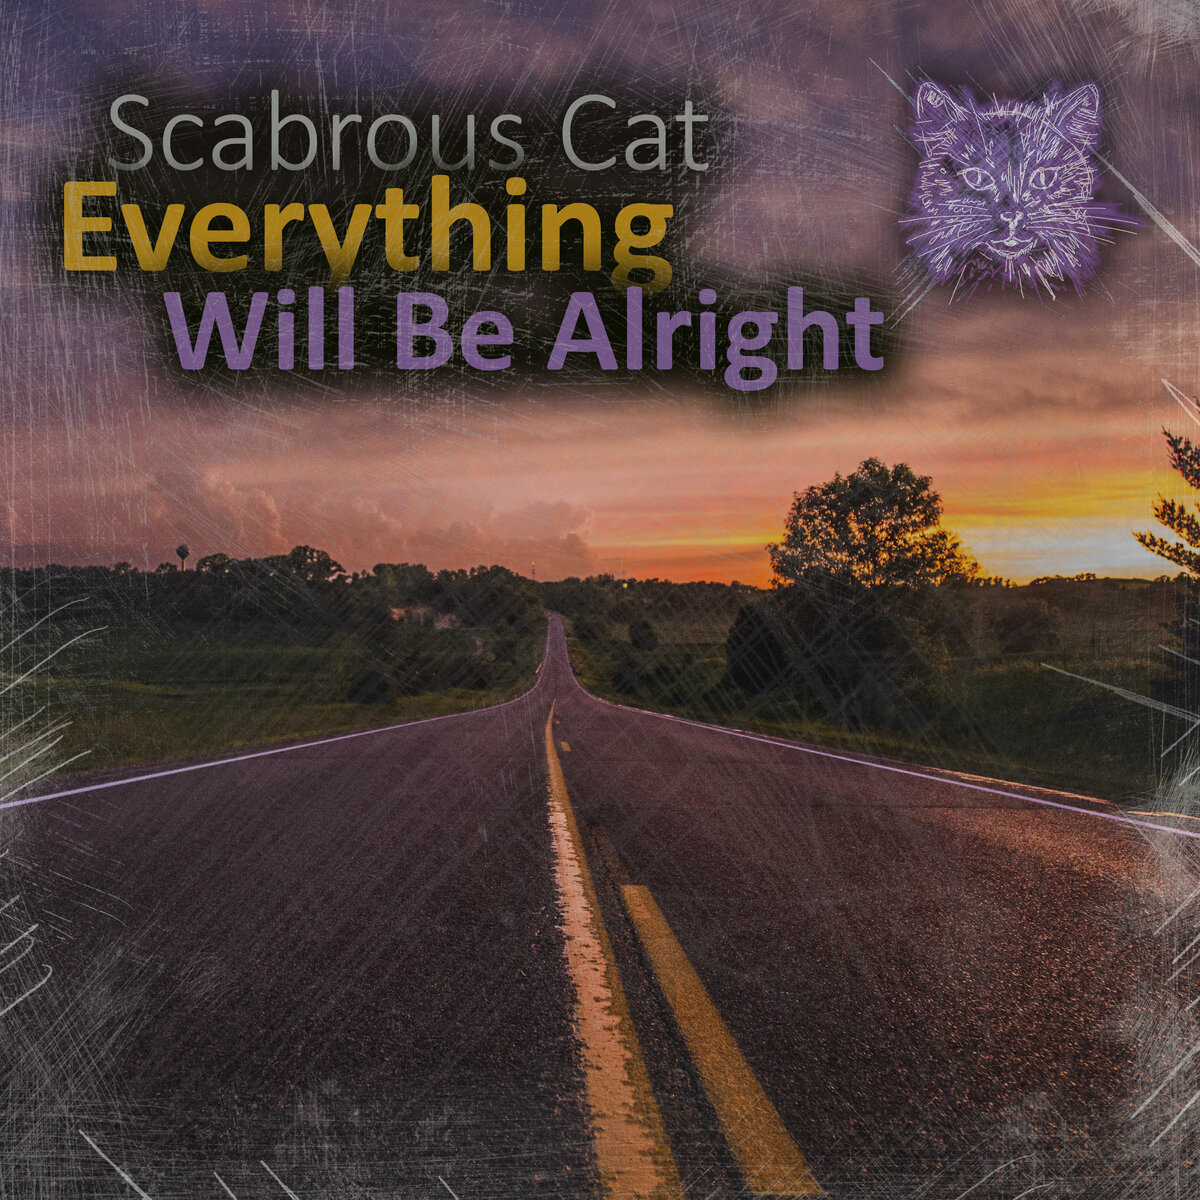 Scabrous Cat – Everything Will Be Alright (новый лоуфай / лаунж релиз).